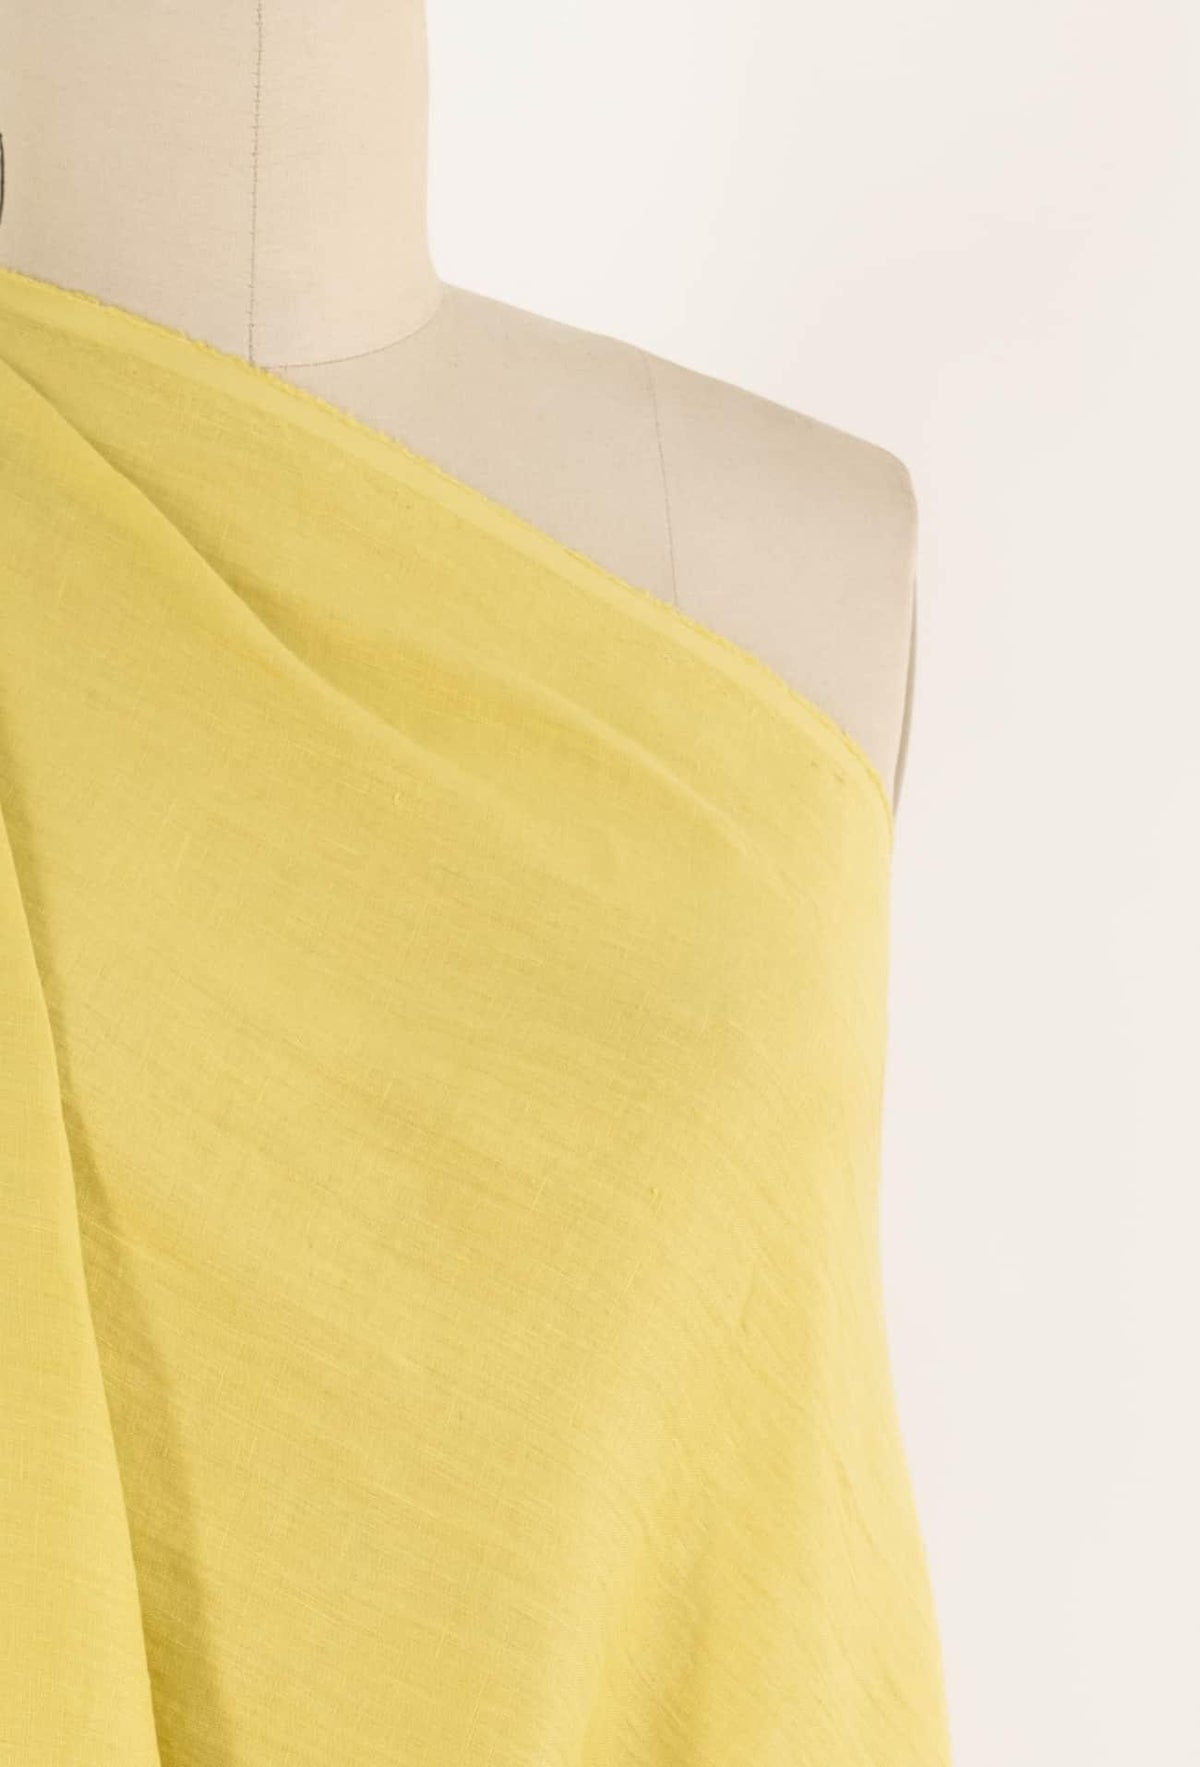 Canary Washed Linen Woven - Marcy Tilton Fabrics